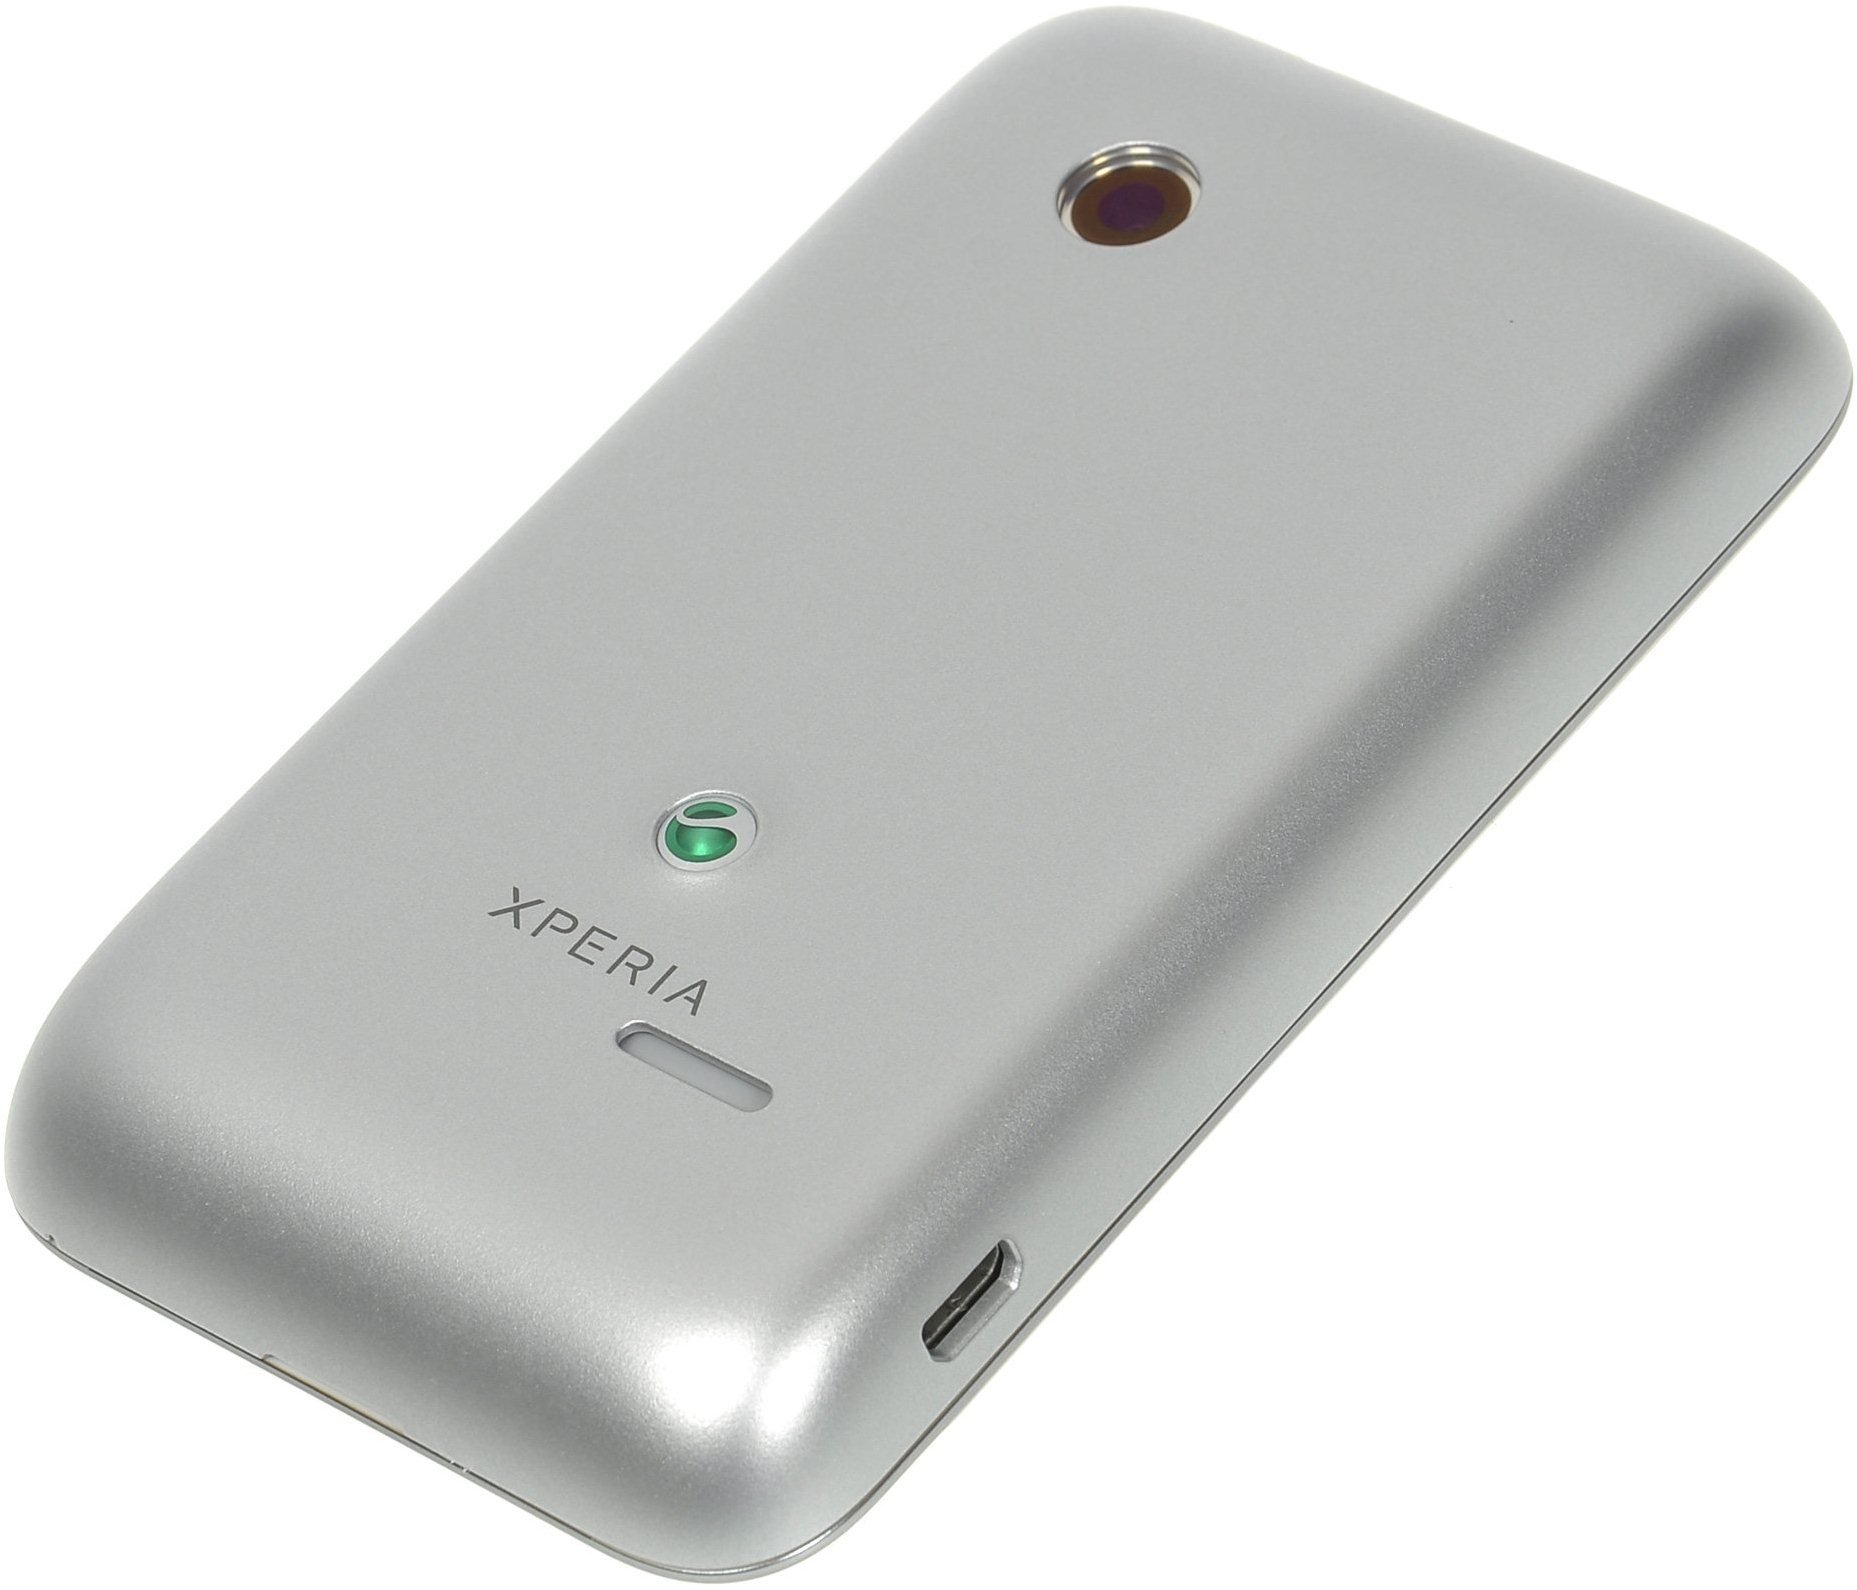 Sony Xperia tipo dual (ST21i) Classic Silver - Mobile Phone | Alza.cz